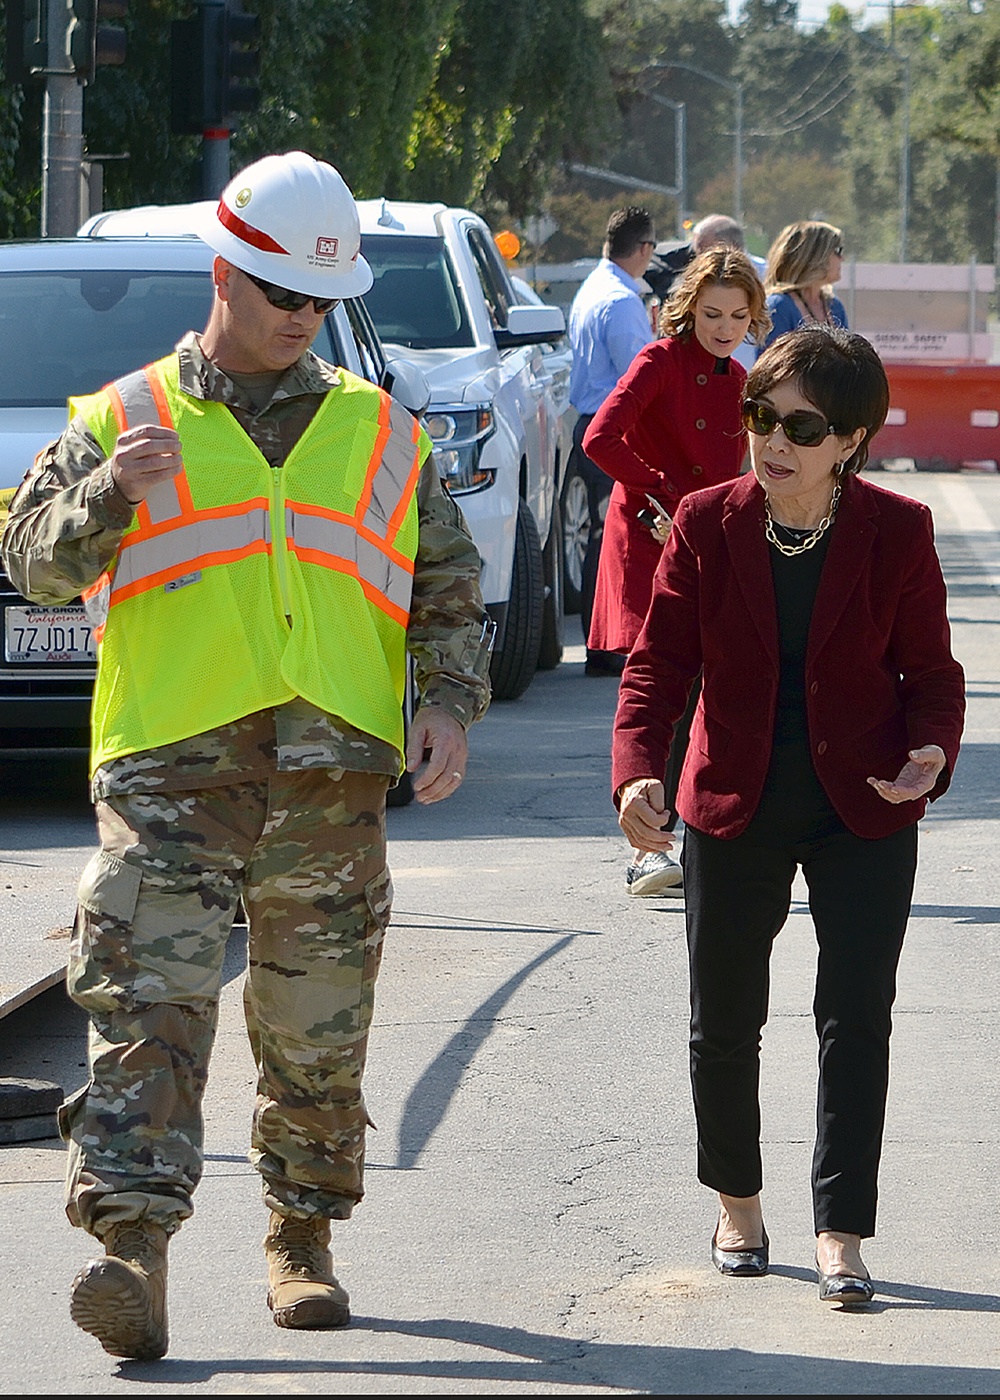 Congresswoman Matsui visits Natomas Levee Improvement Project